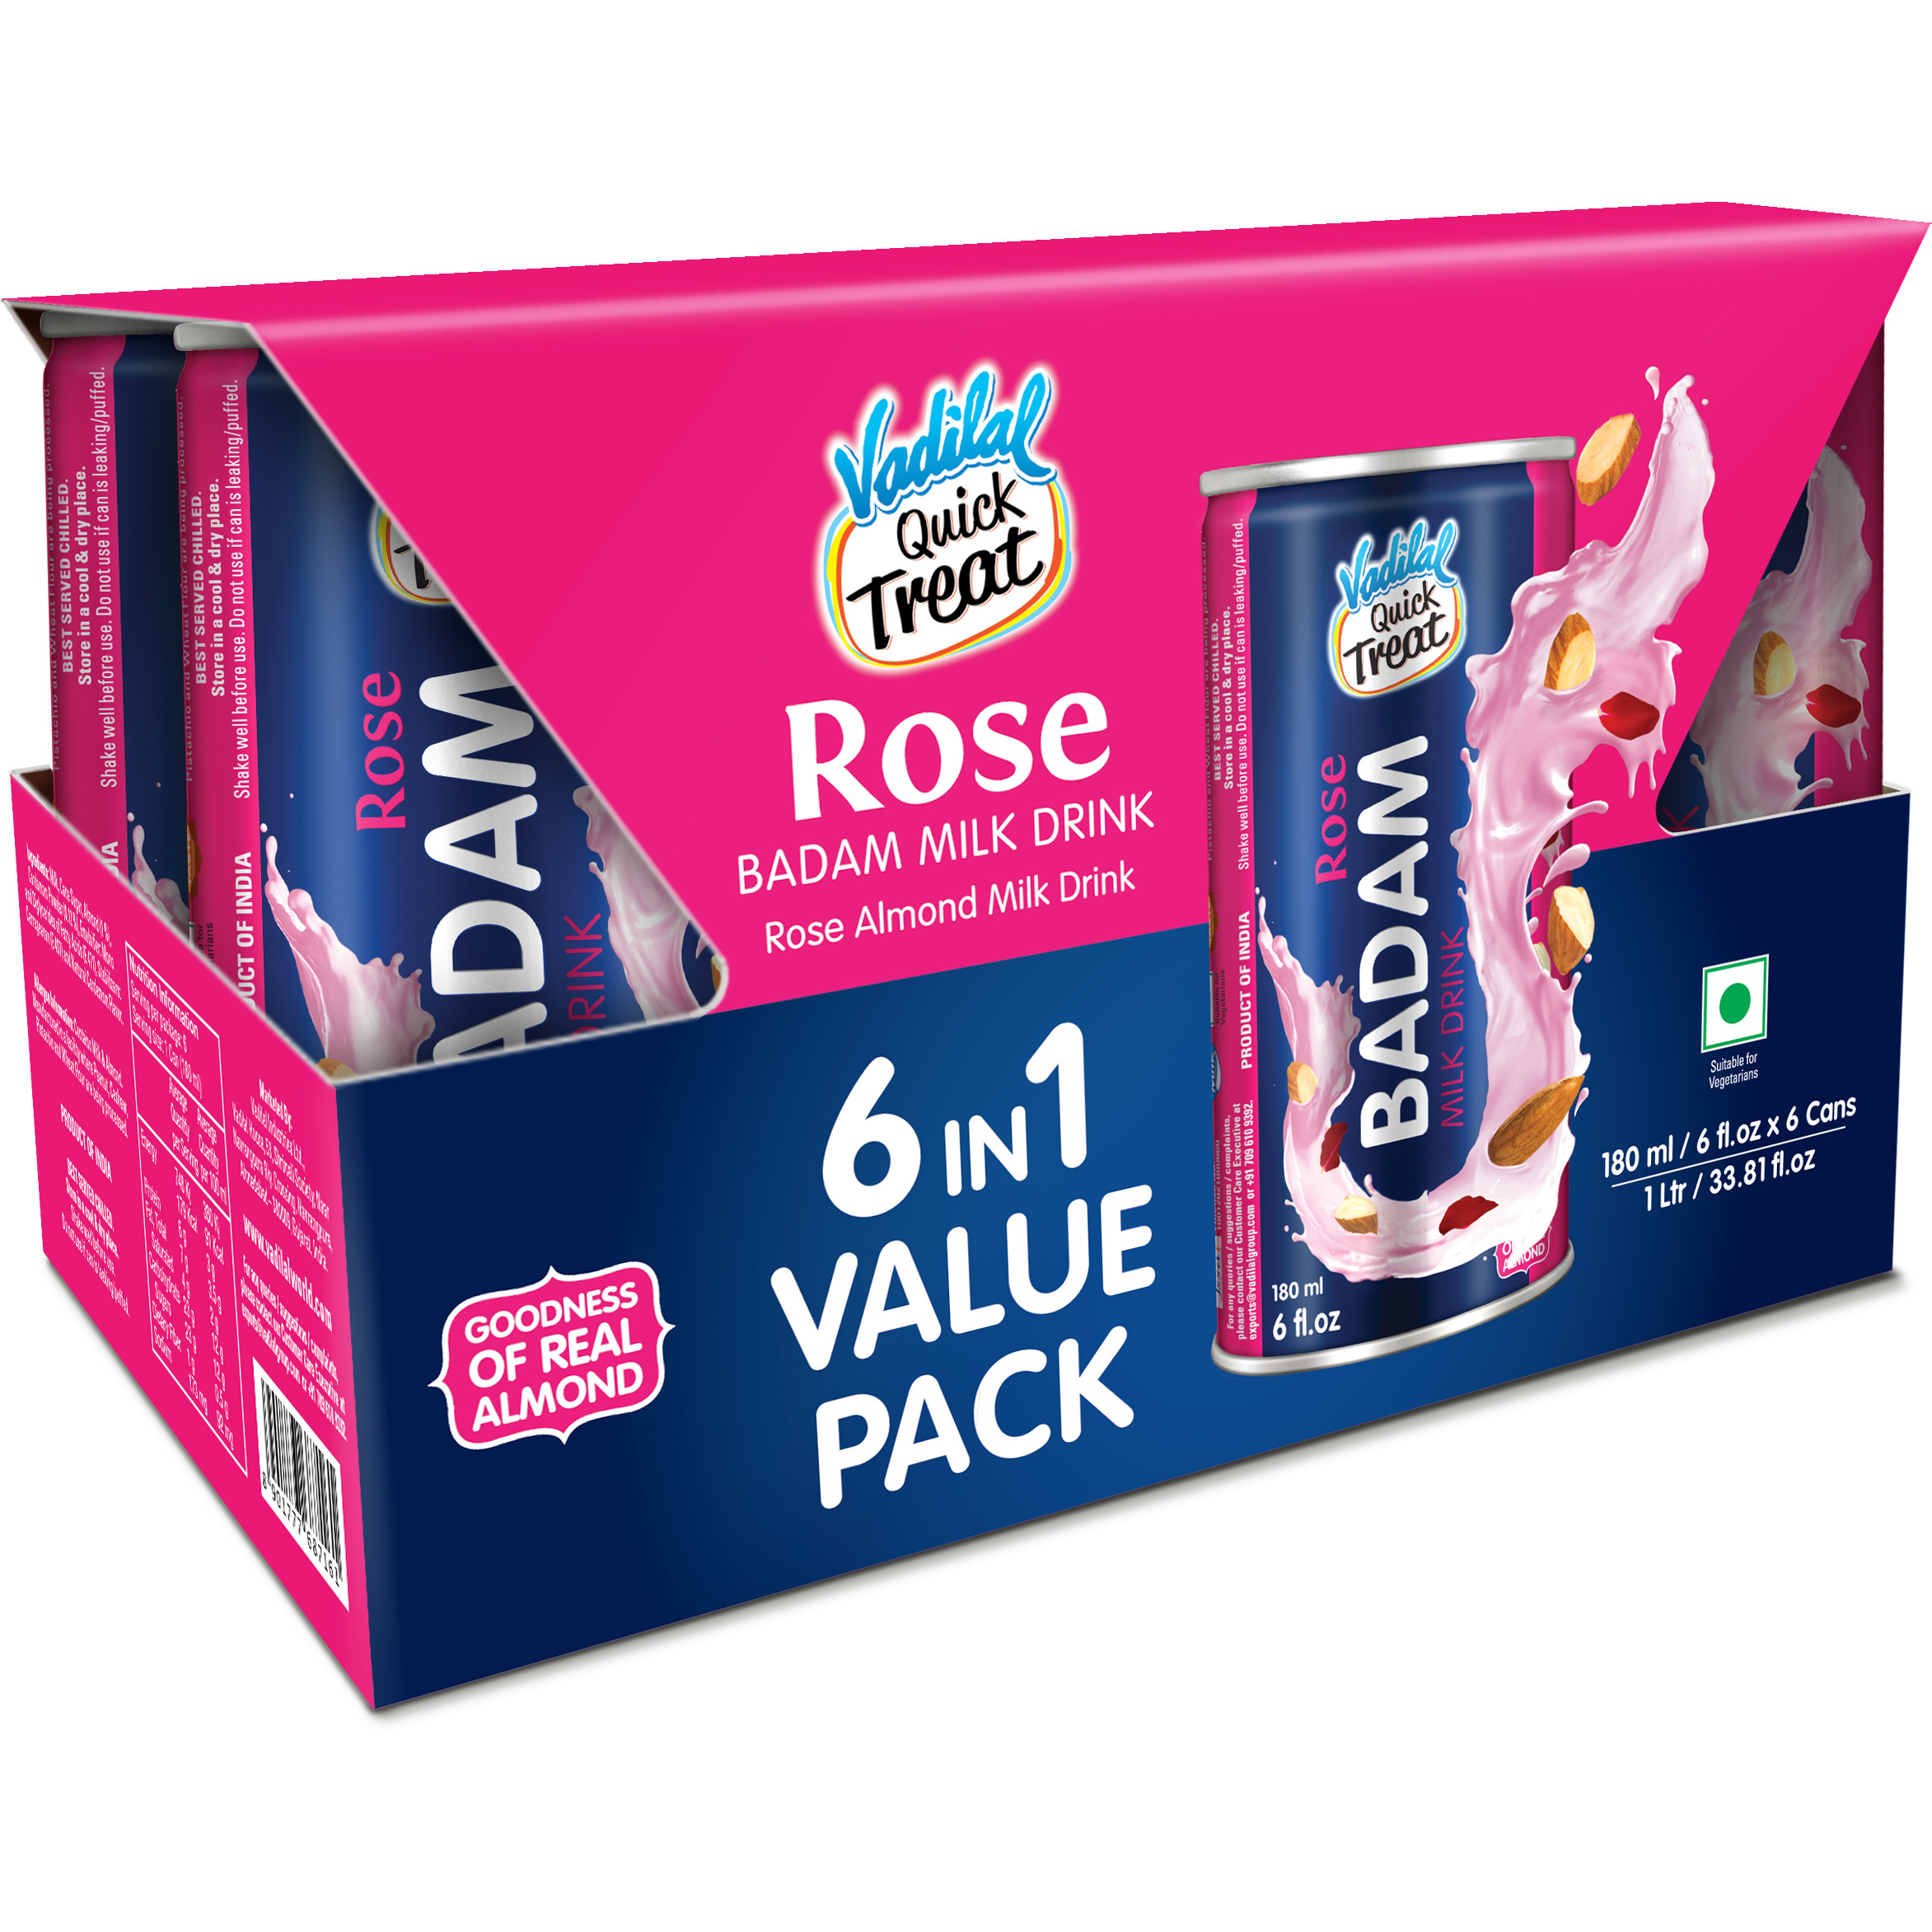 Case of 6 - Vadilal Rose Badam Milk Drink 6 In 1 Value Pack - 180 Ml (6 Fl Oz)